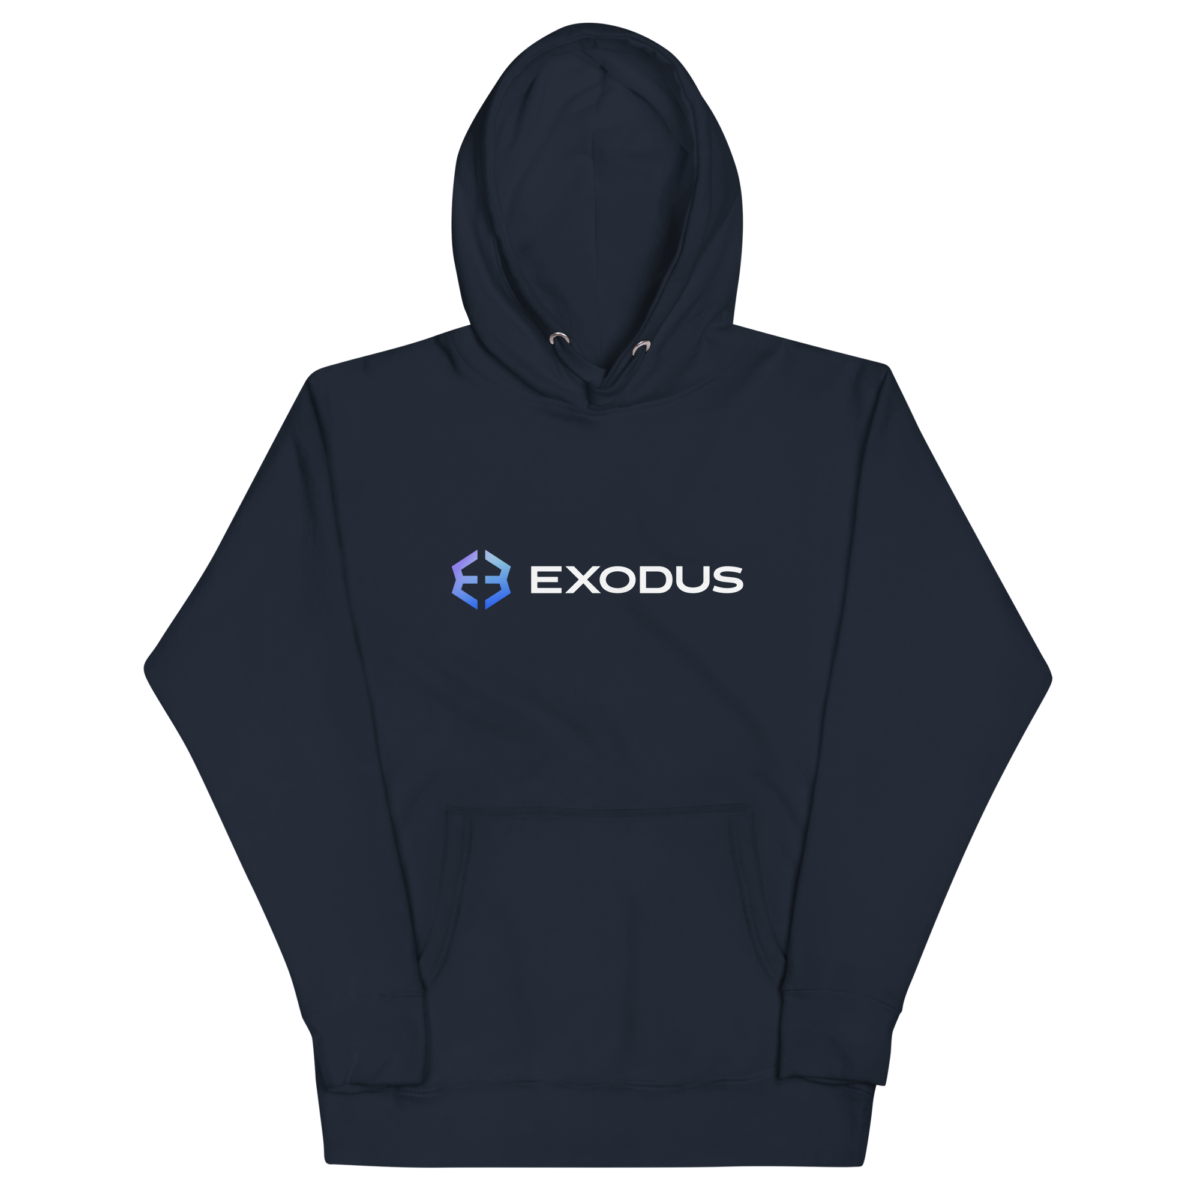 unisex premium hoodie navy blazer front 63172d2d8ce08 - Exodus Hoodie